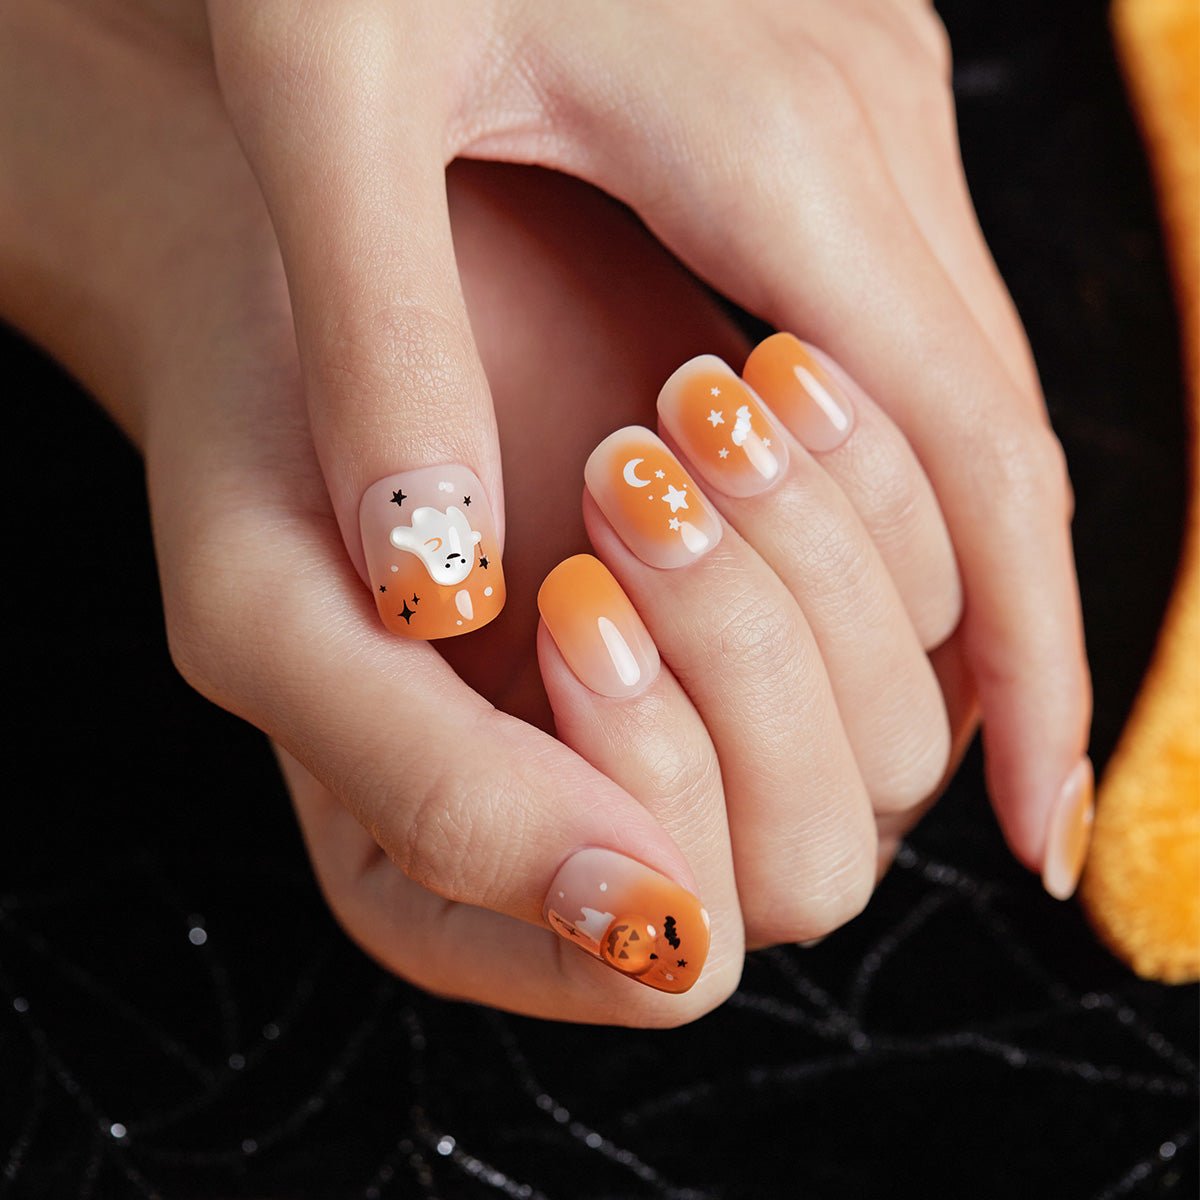 Pumpkin Ghost [Halloween Special] - Magic Press Art - Manicure - Dashing Diva Singapore